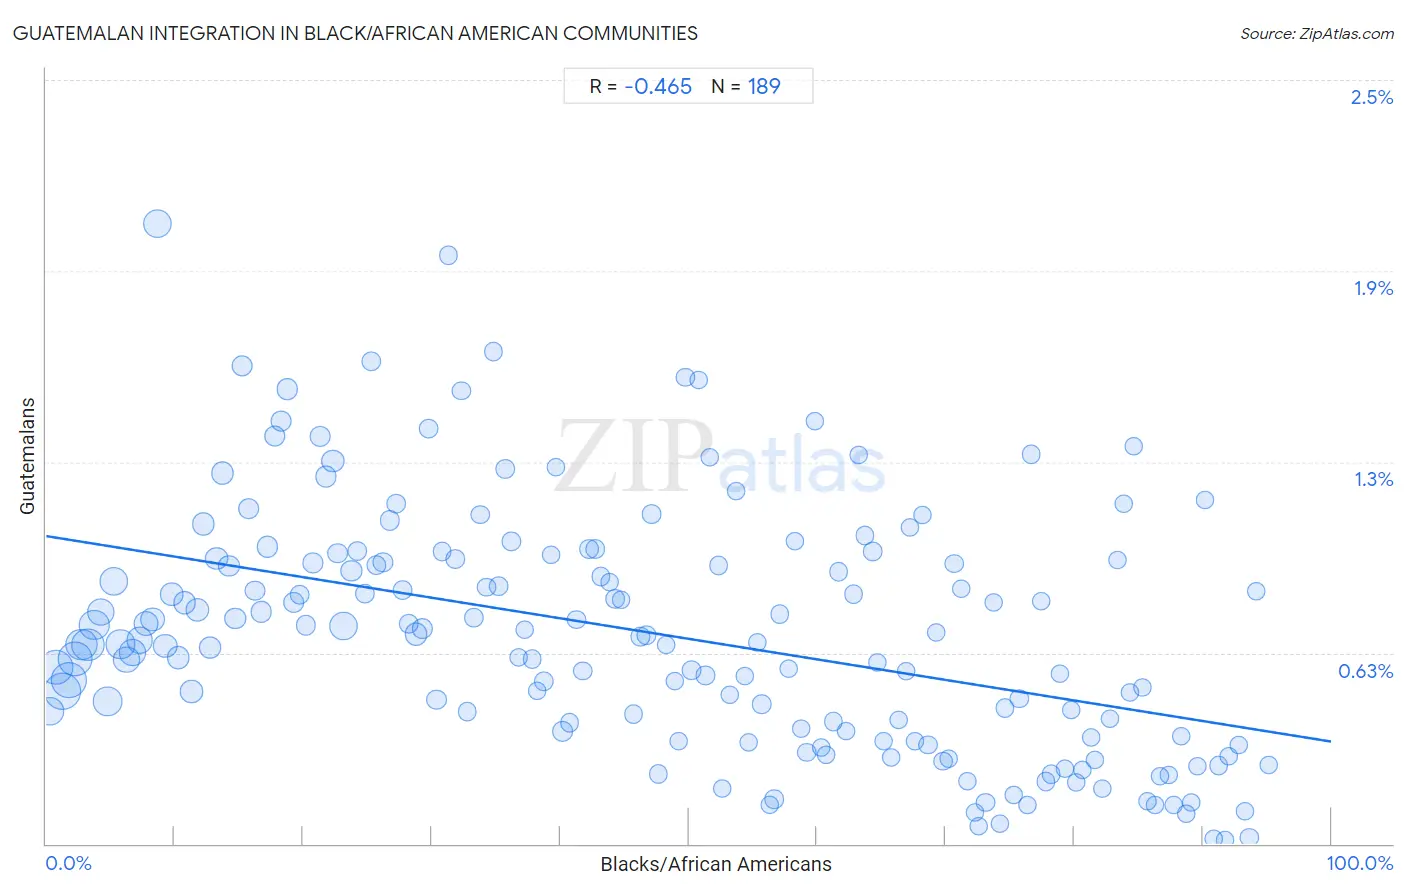 Black/African American Integration in Guatemalan Communities